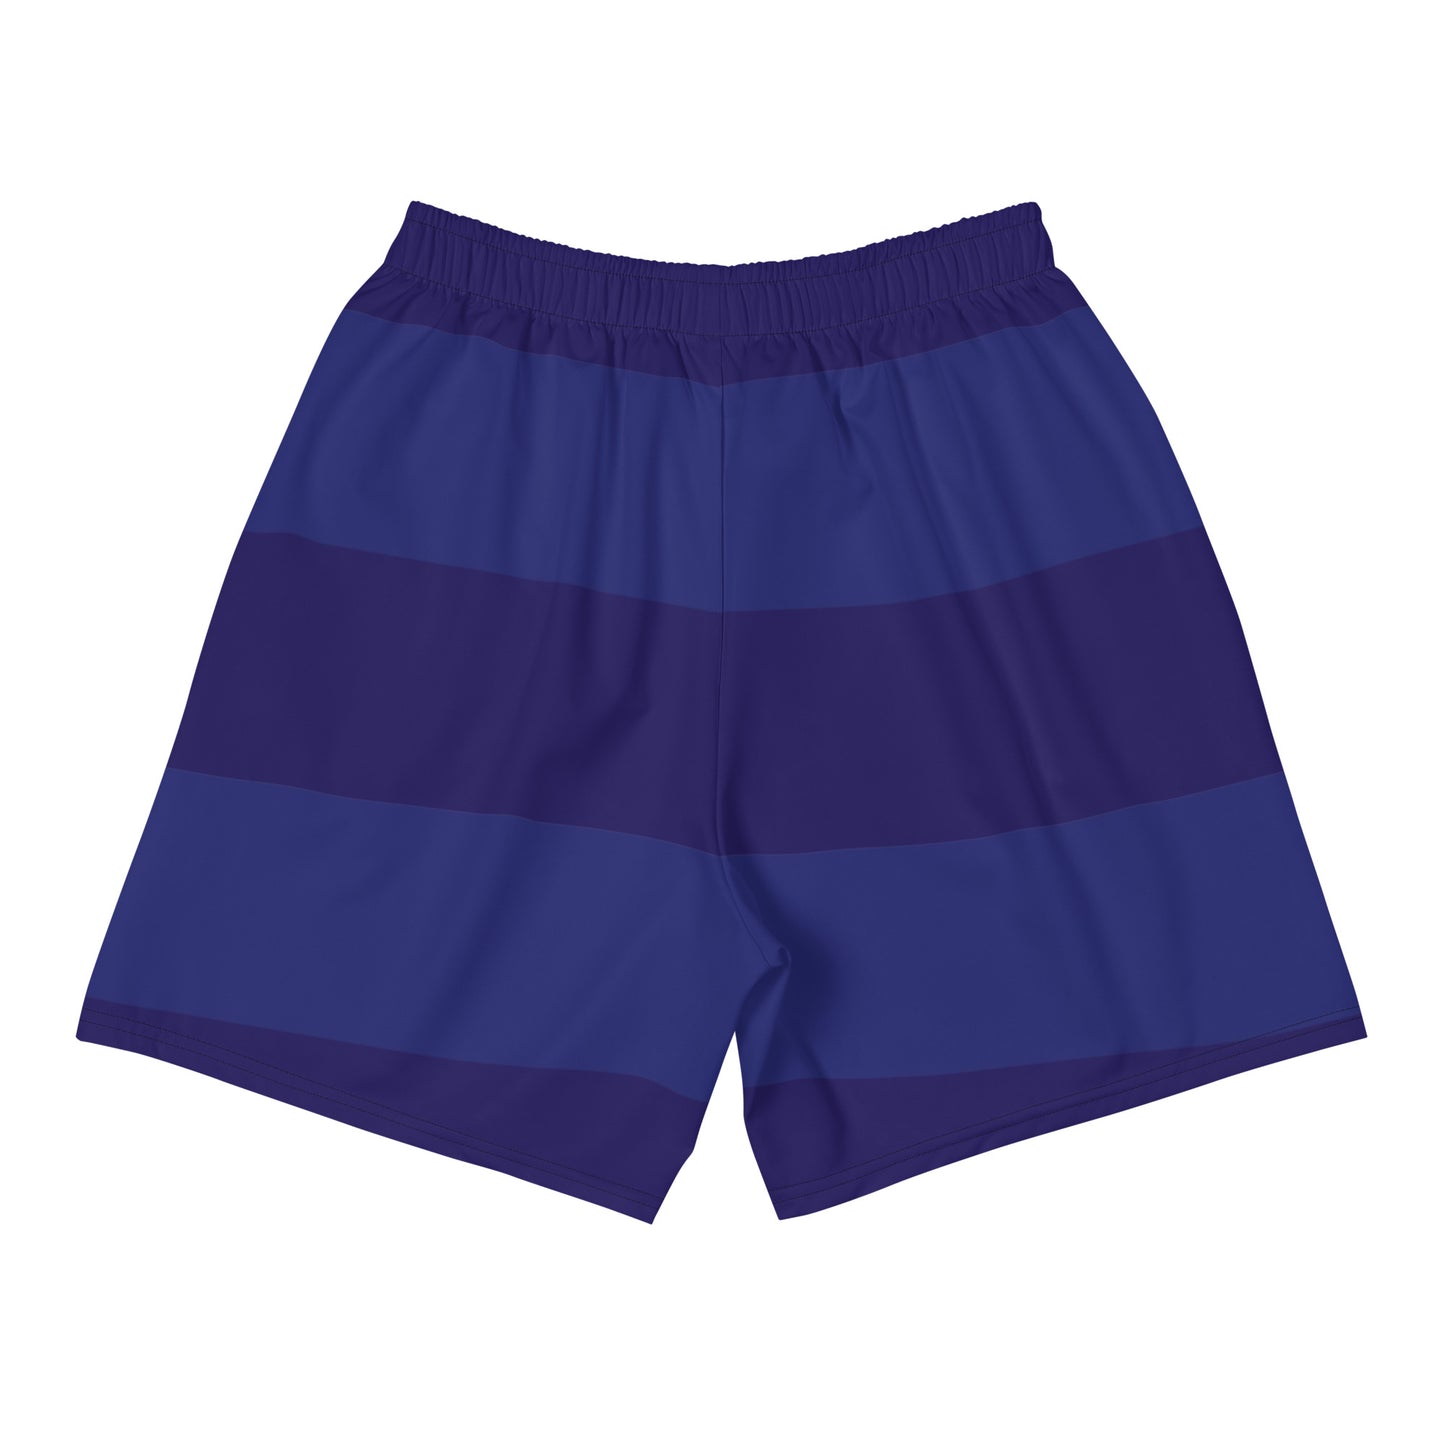 Mixed Blue - Sustainably Made Men's Short